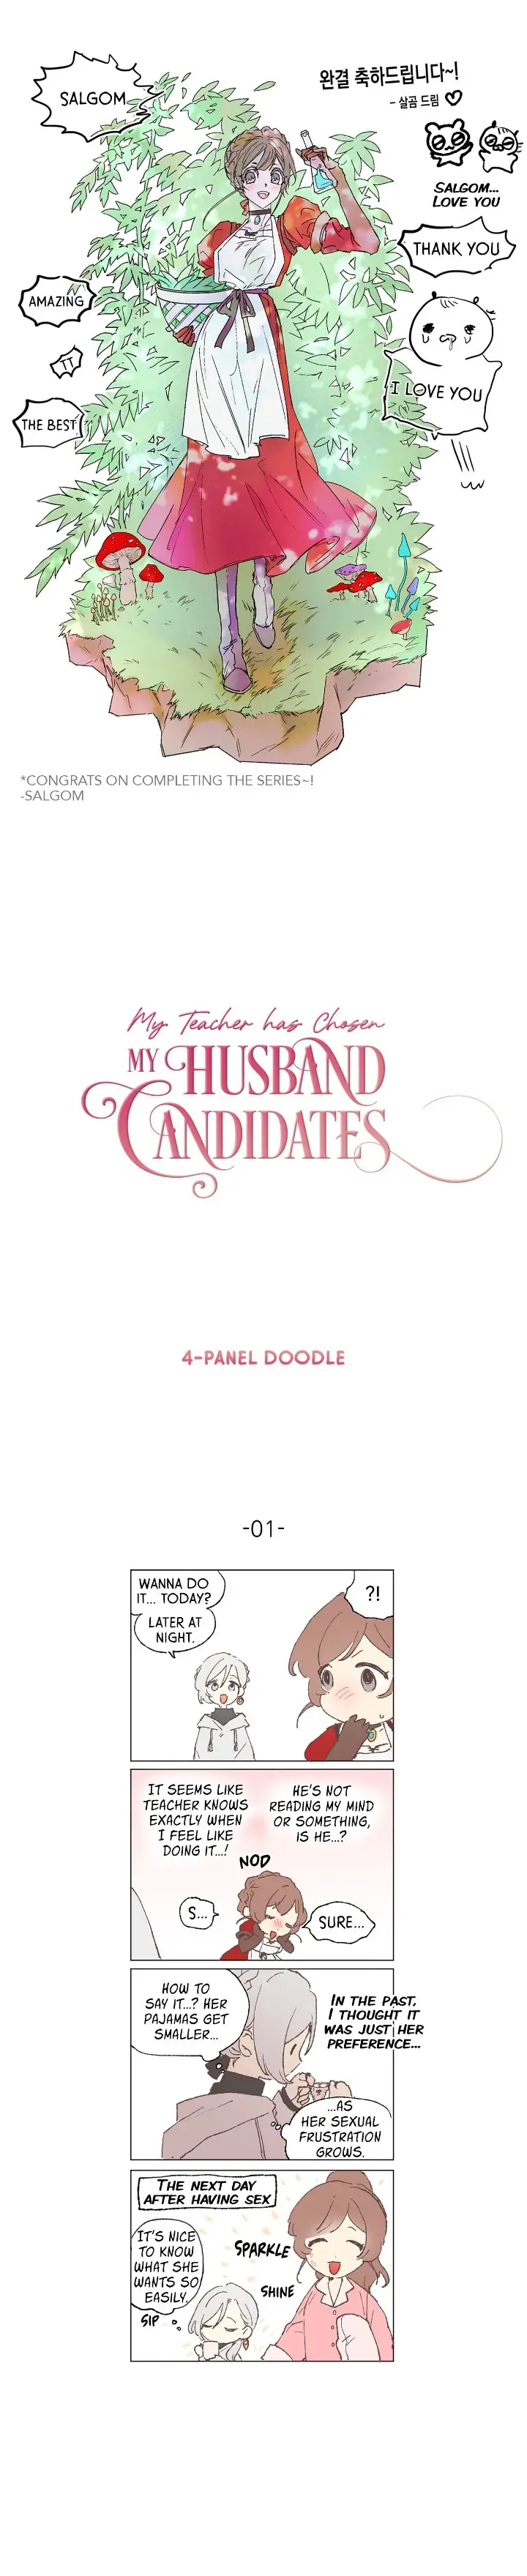 My Teacher Has Chosen My Husband Candidates chapter 40.5 - page 11